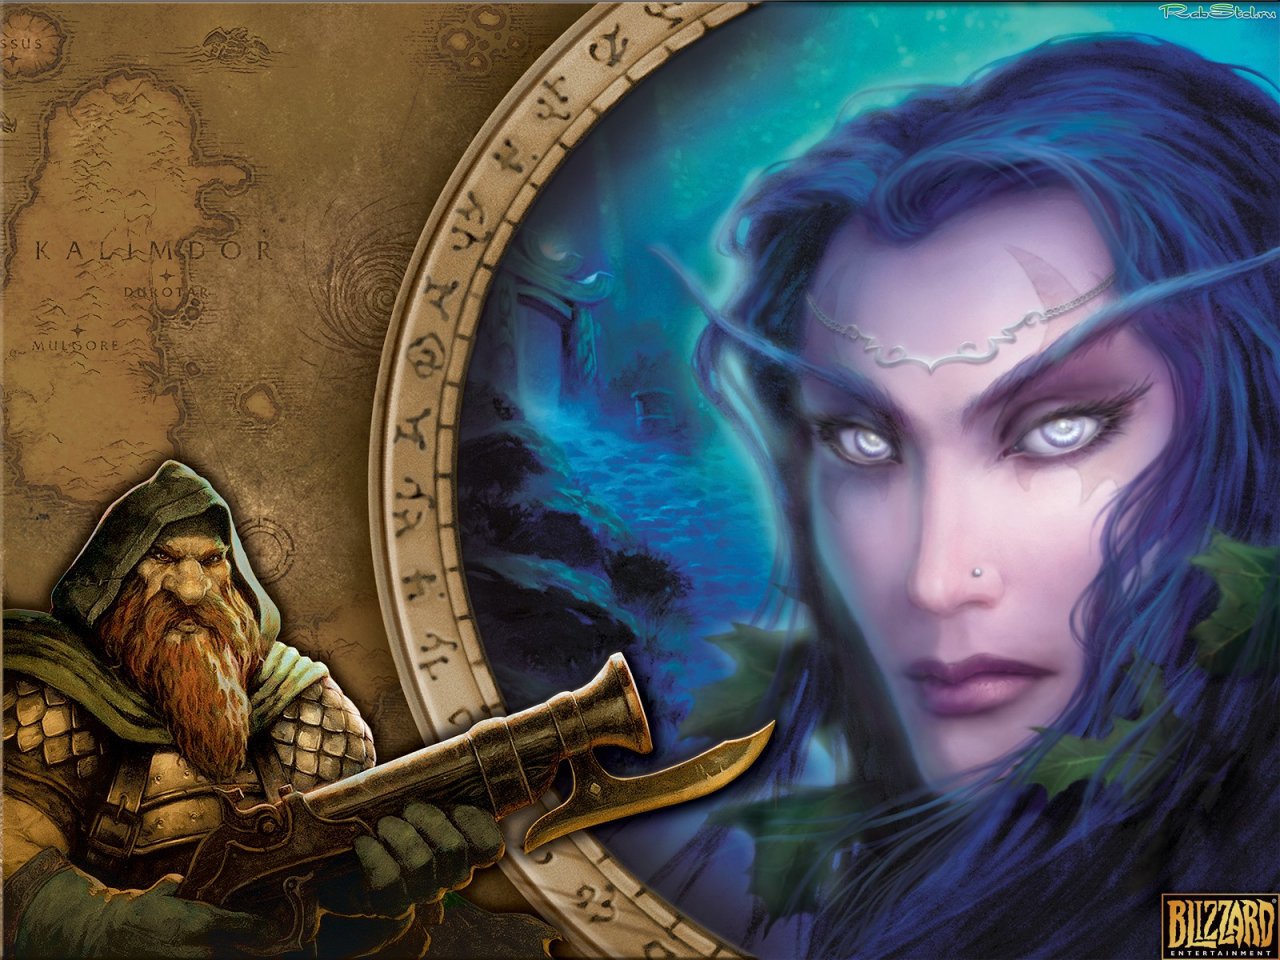 world of warcraft 4.3.4 download free — World of Warcraft Starter 